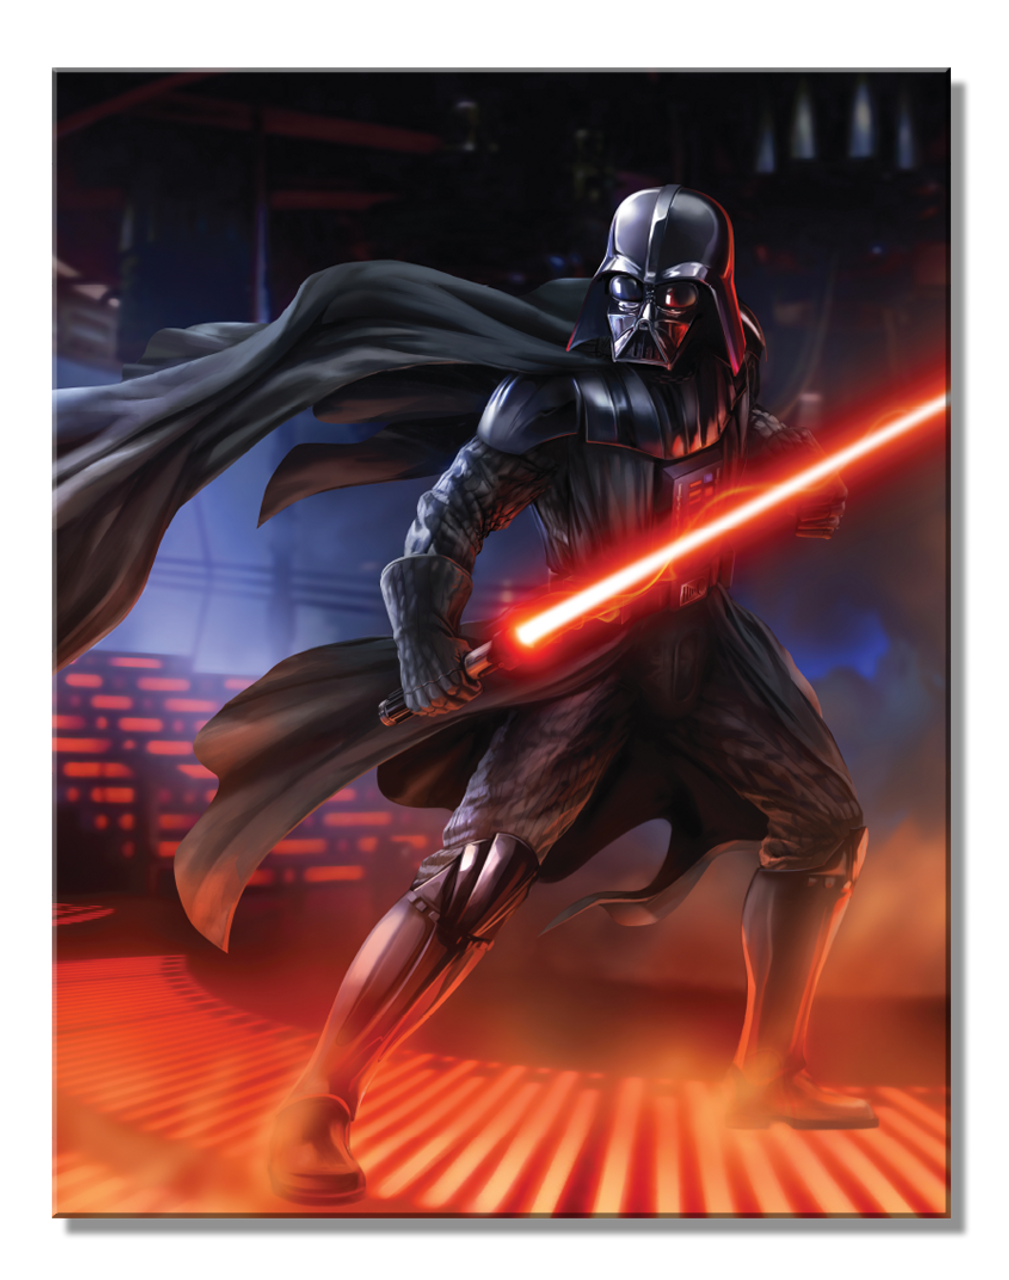 Star Wars Darth Vader Tin Sign